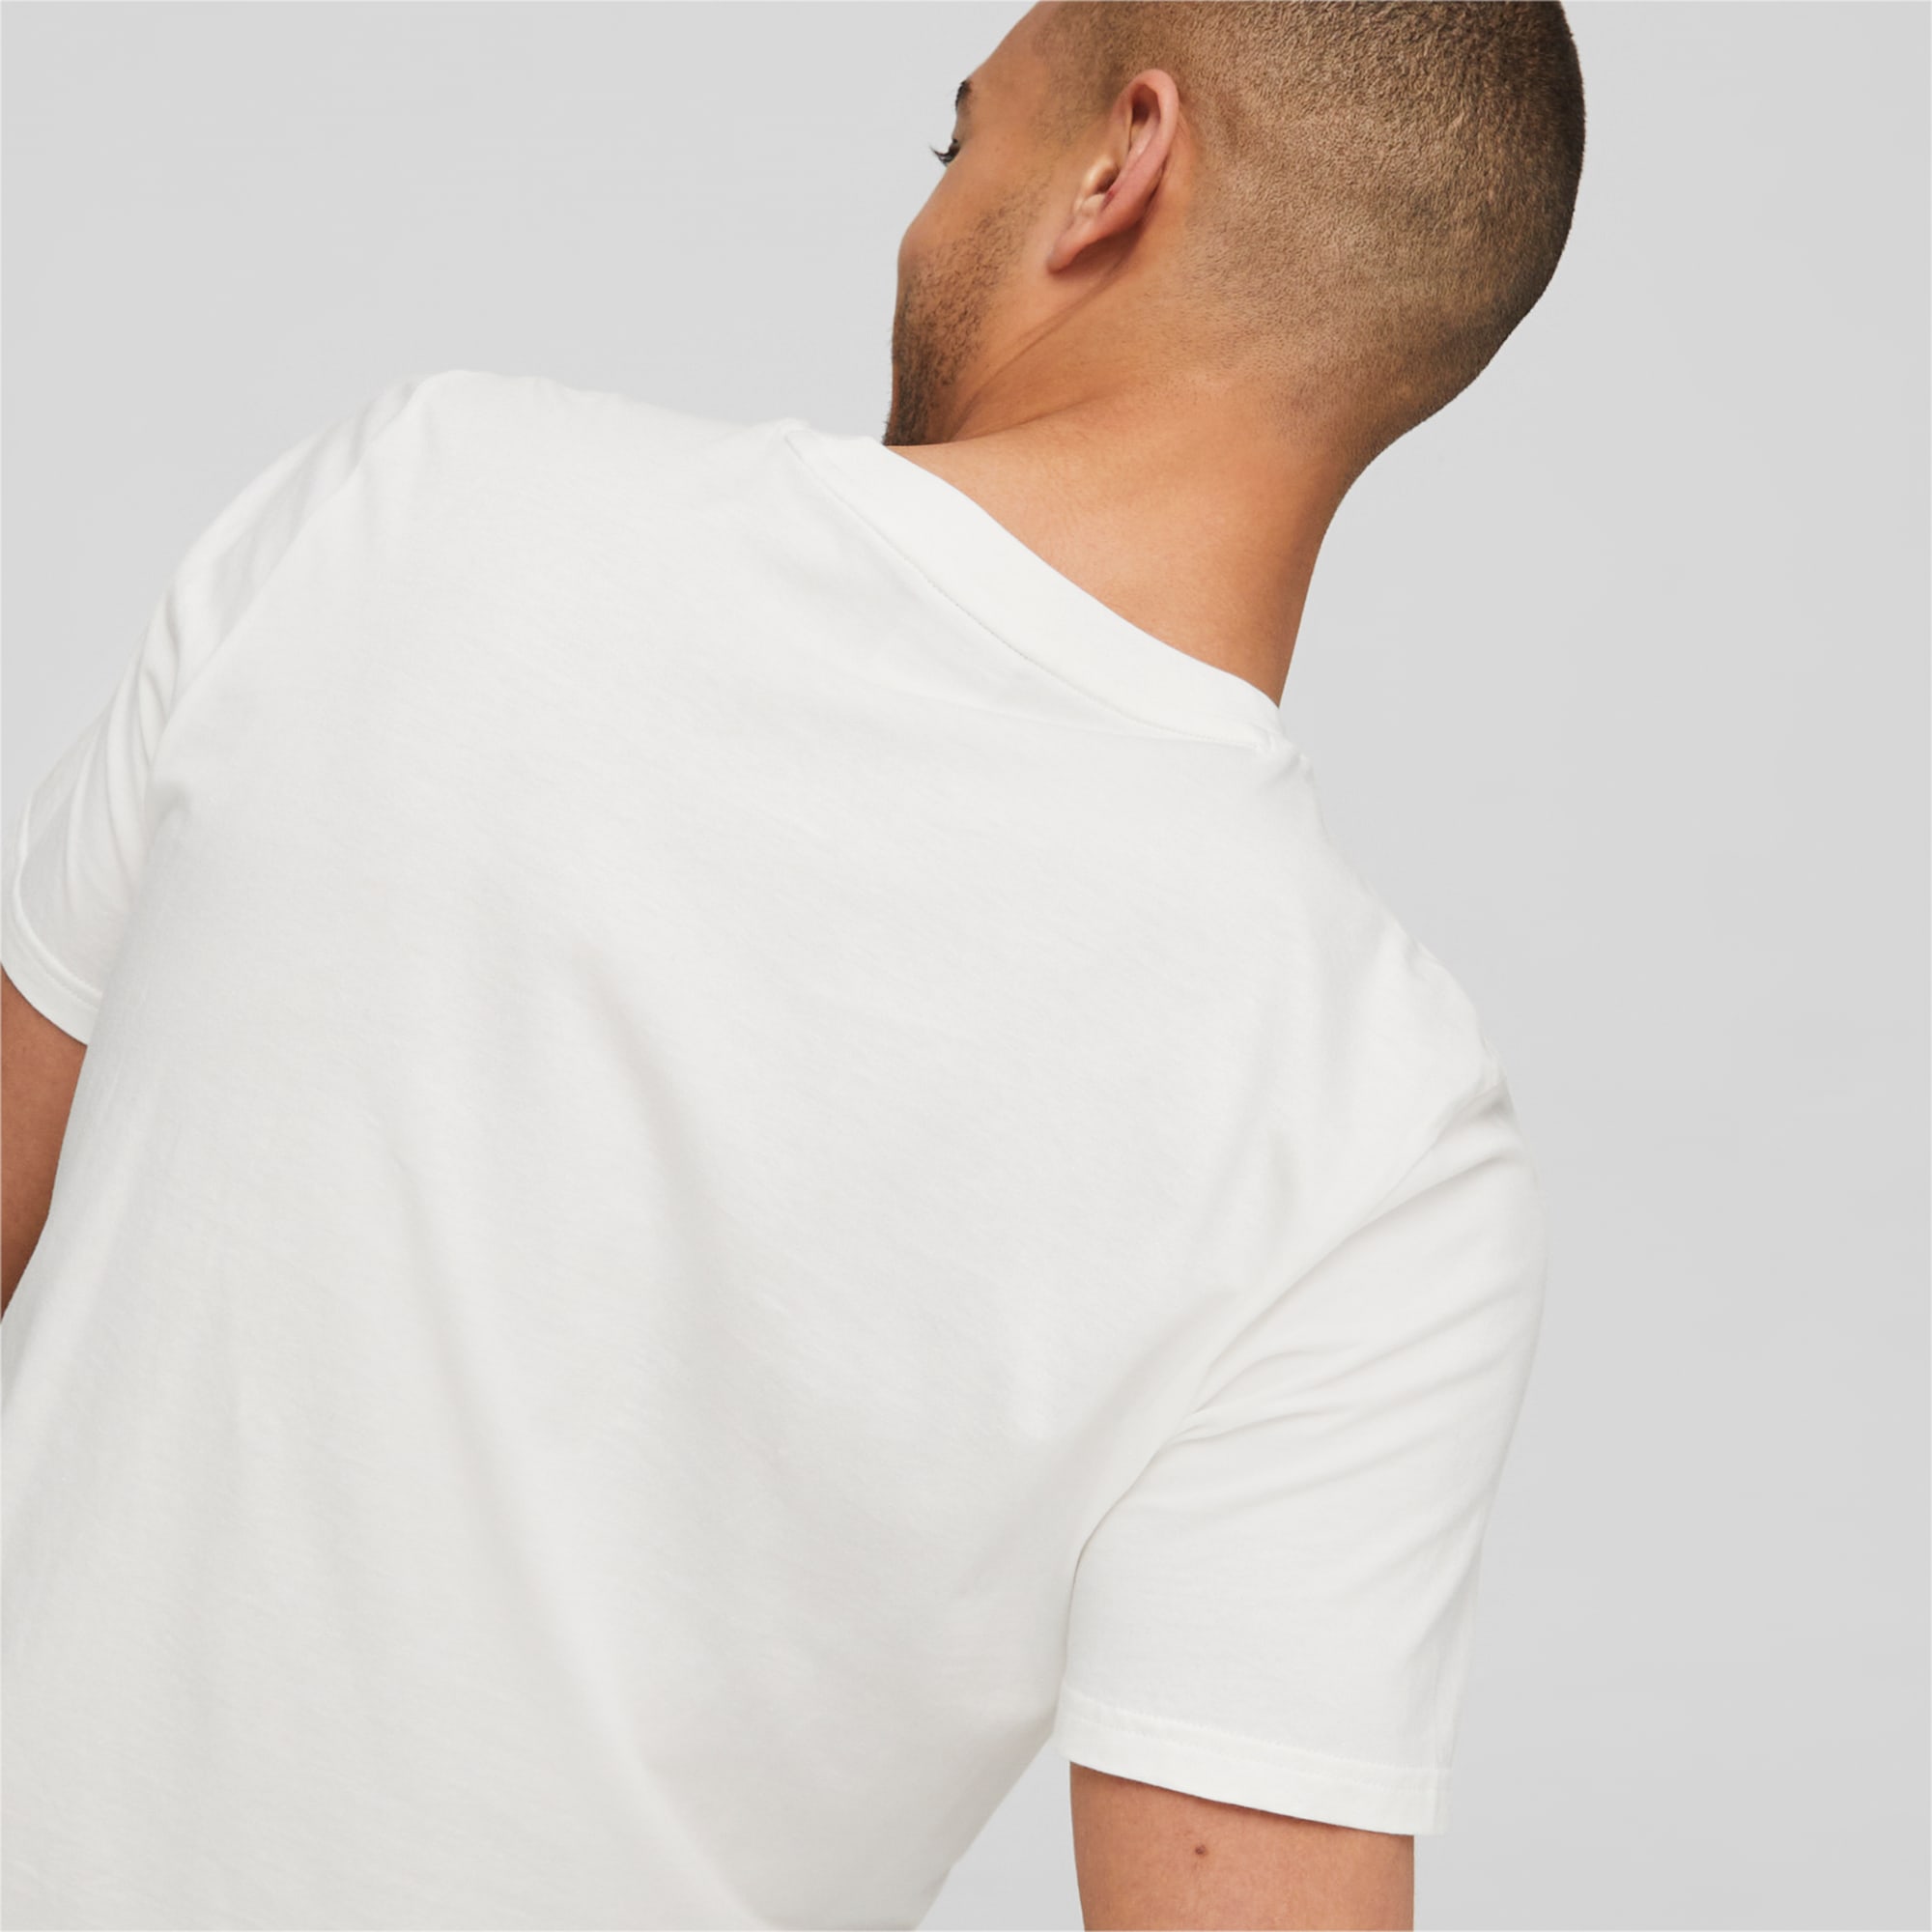 PUMA Classics Small Logo T-Shirt Men, White